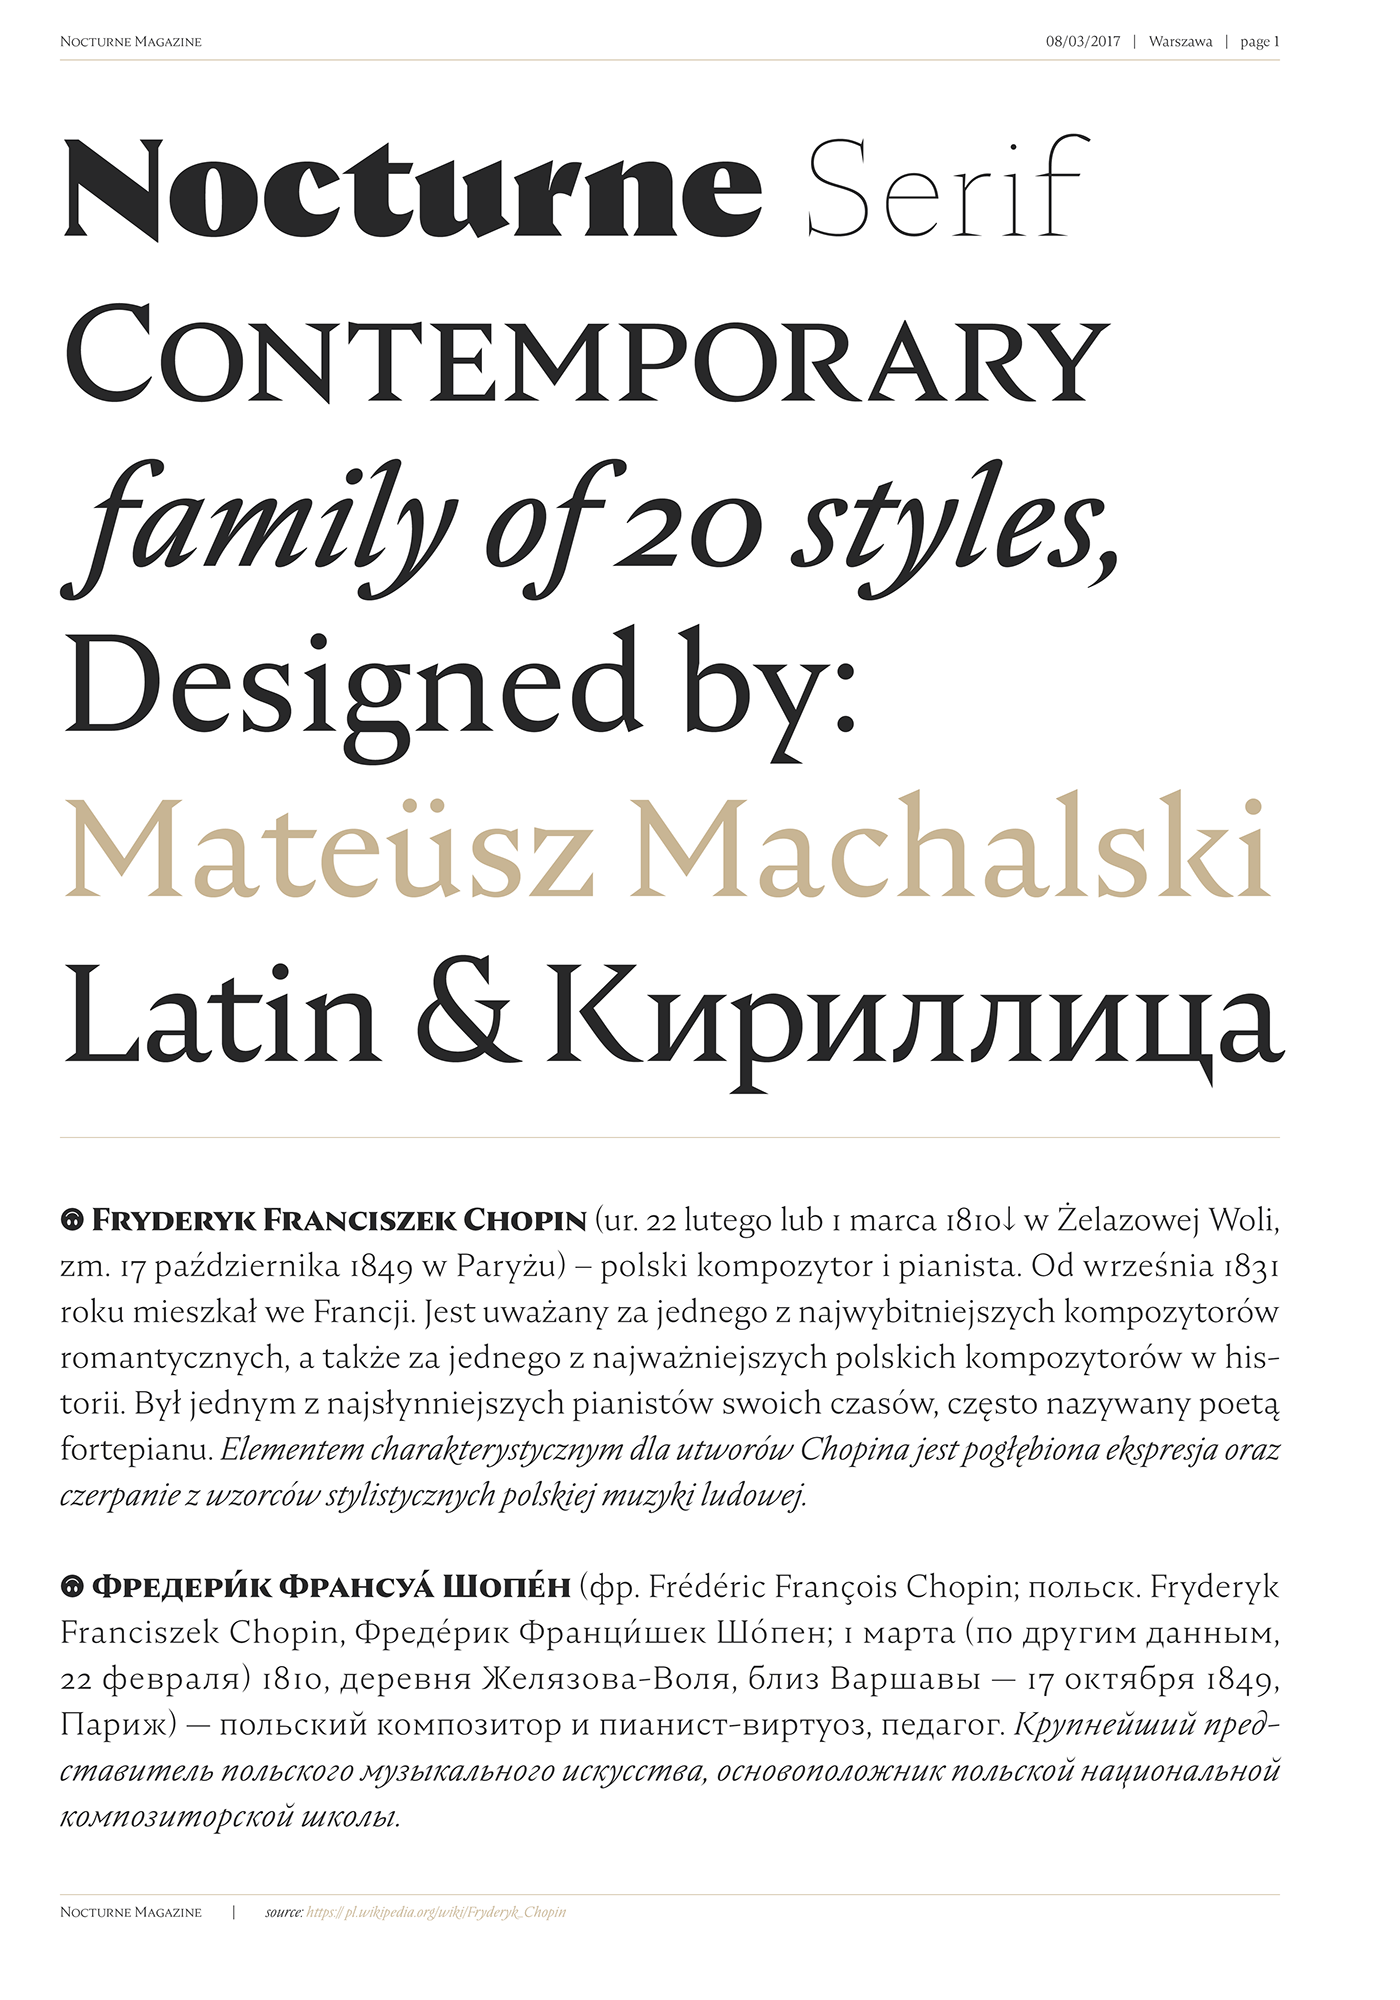 Nocturne Serif MACHALSKI MATEUSZ  font design corporate Sharp family modern warsaw types POLISH TYPOGRAPHY  contemporary